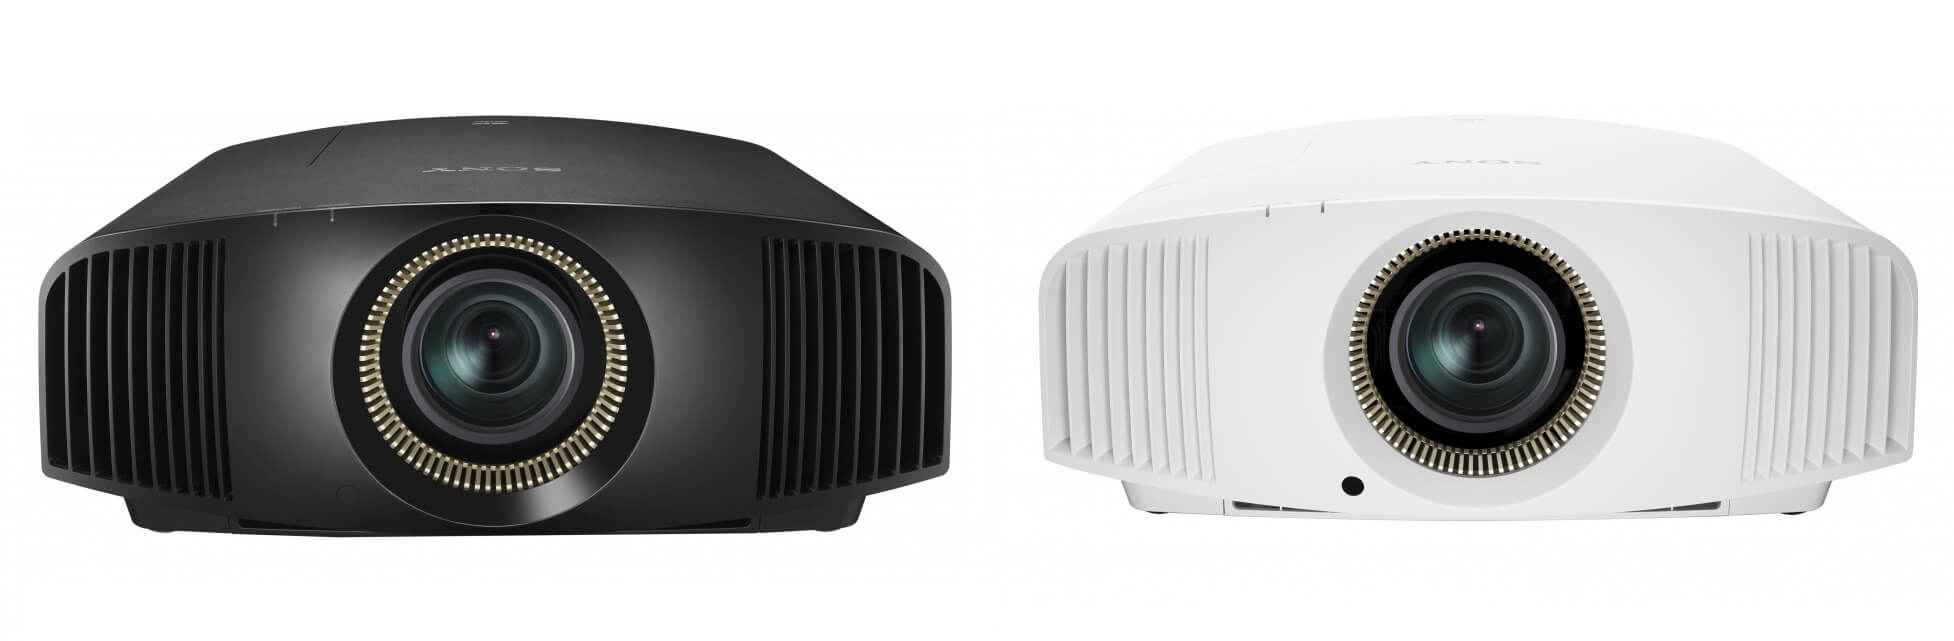 Sony представила новый 4K проектор VPL-VW550ES 